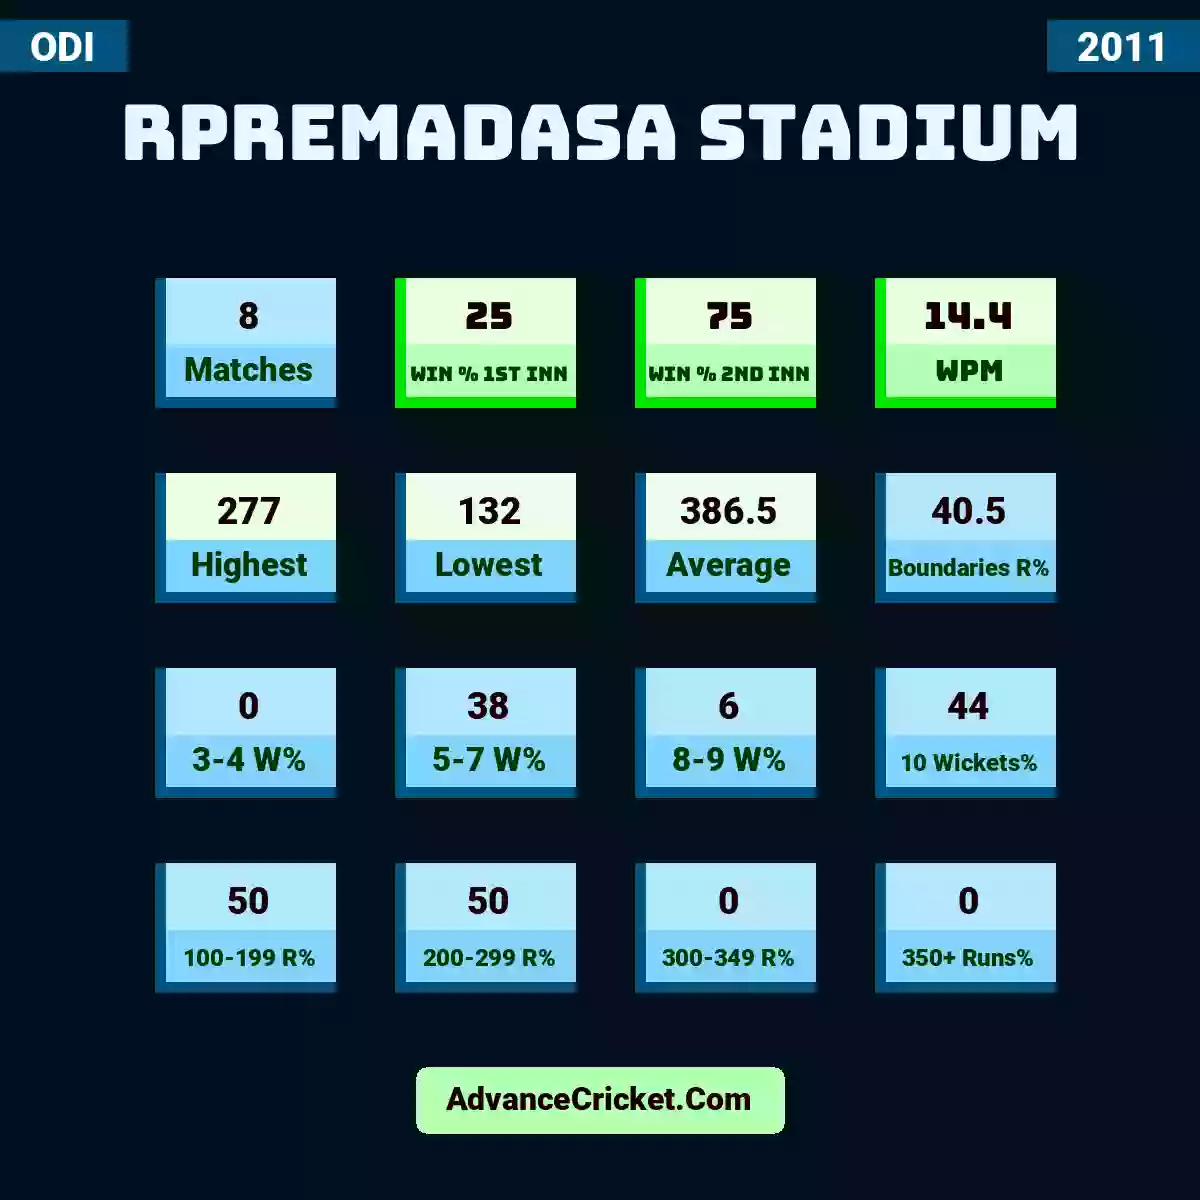 Image showing RPremadasa Stadium with Matches: 8, Win % 1st Inn: 25, Win % 2nd Inn: 75, WPM: 14.4, Highest: 277, Lowest: 132, Average: 386.5, Boundaries R%: 40.5, 3-4 W%: 0, 5-7 W%: 38, 8-9 W%: 6, 10 Wickets%: 44, 100-199 R%: 50, 200-299 R%: 50, 300-349 R%: 0, 350+ Runs%: 0.